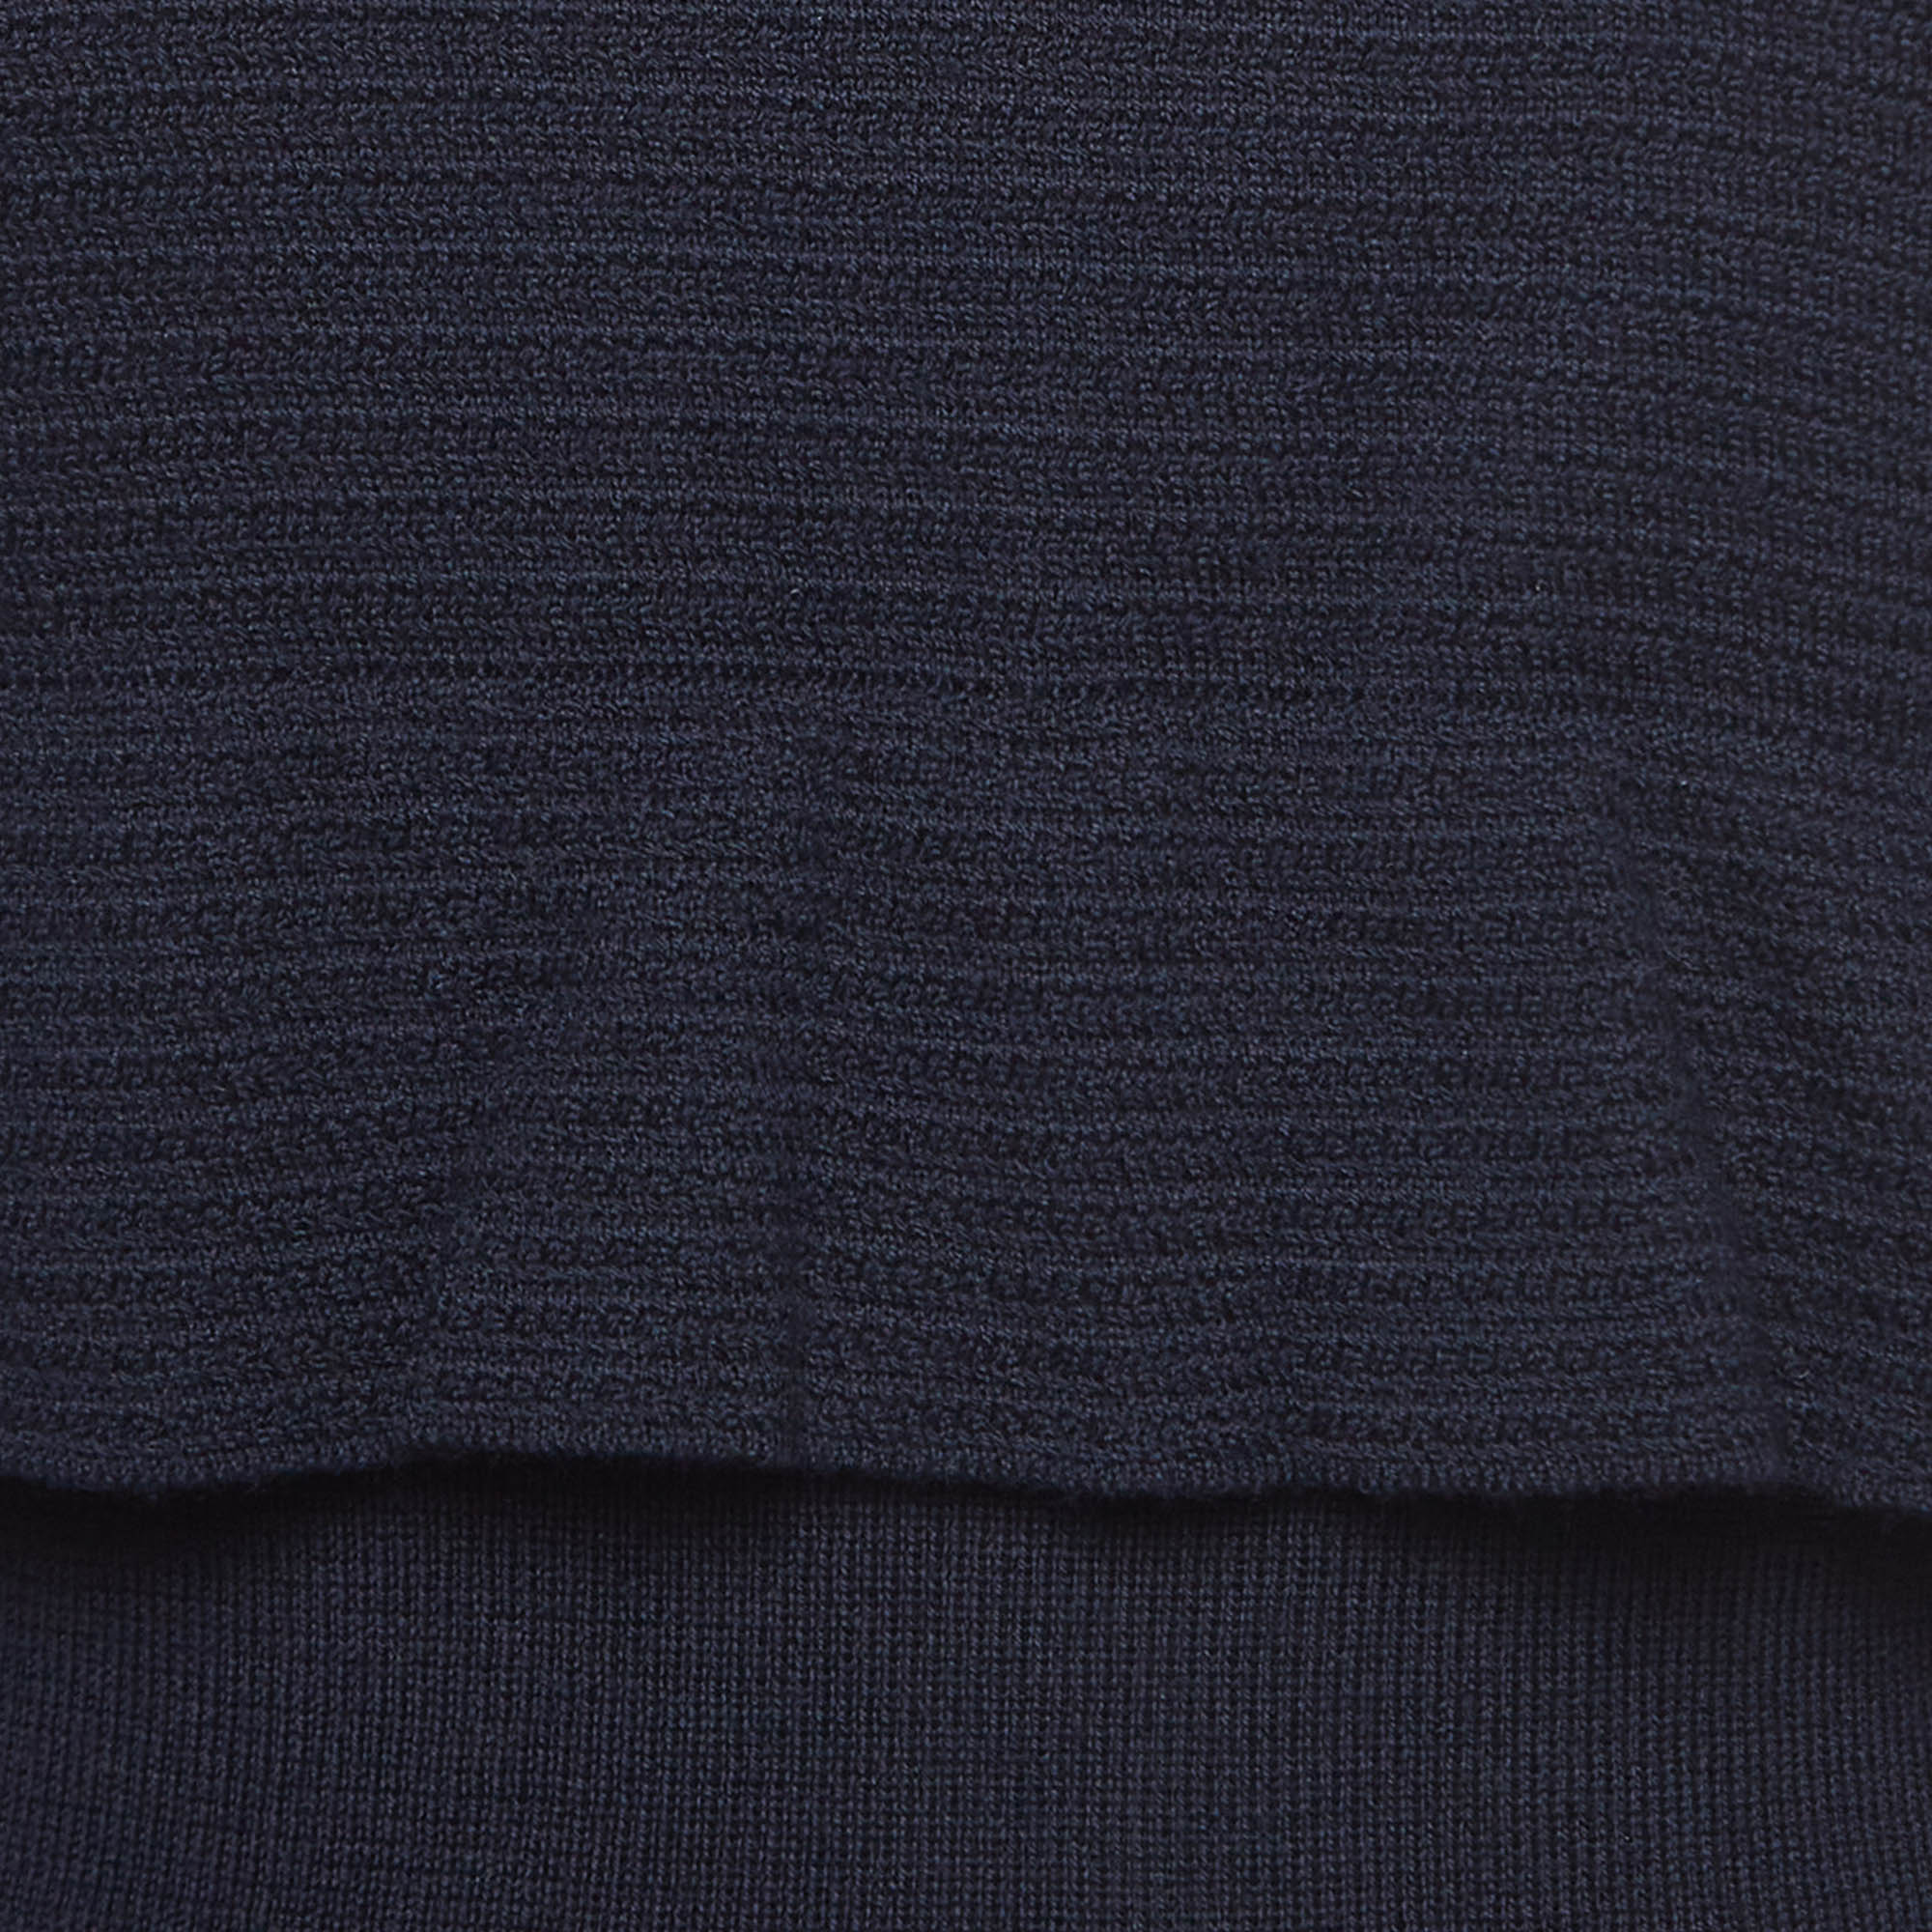 Versace Navy Blue Wool Knit Turtle Neck Long Sleeve Top M